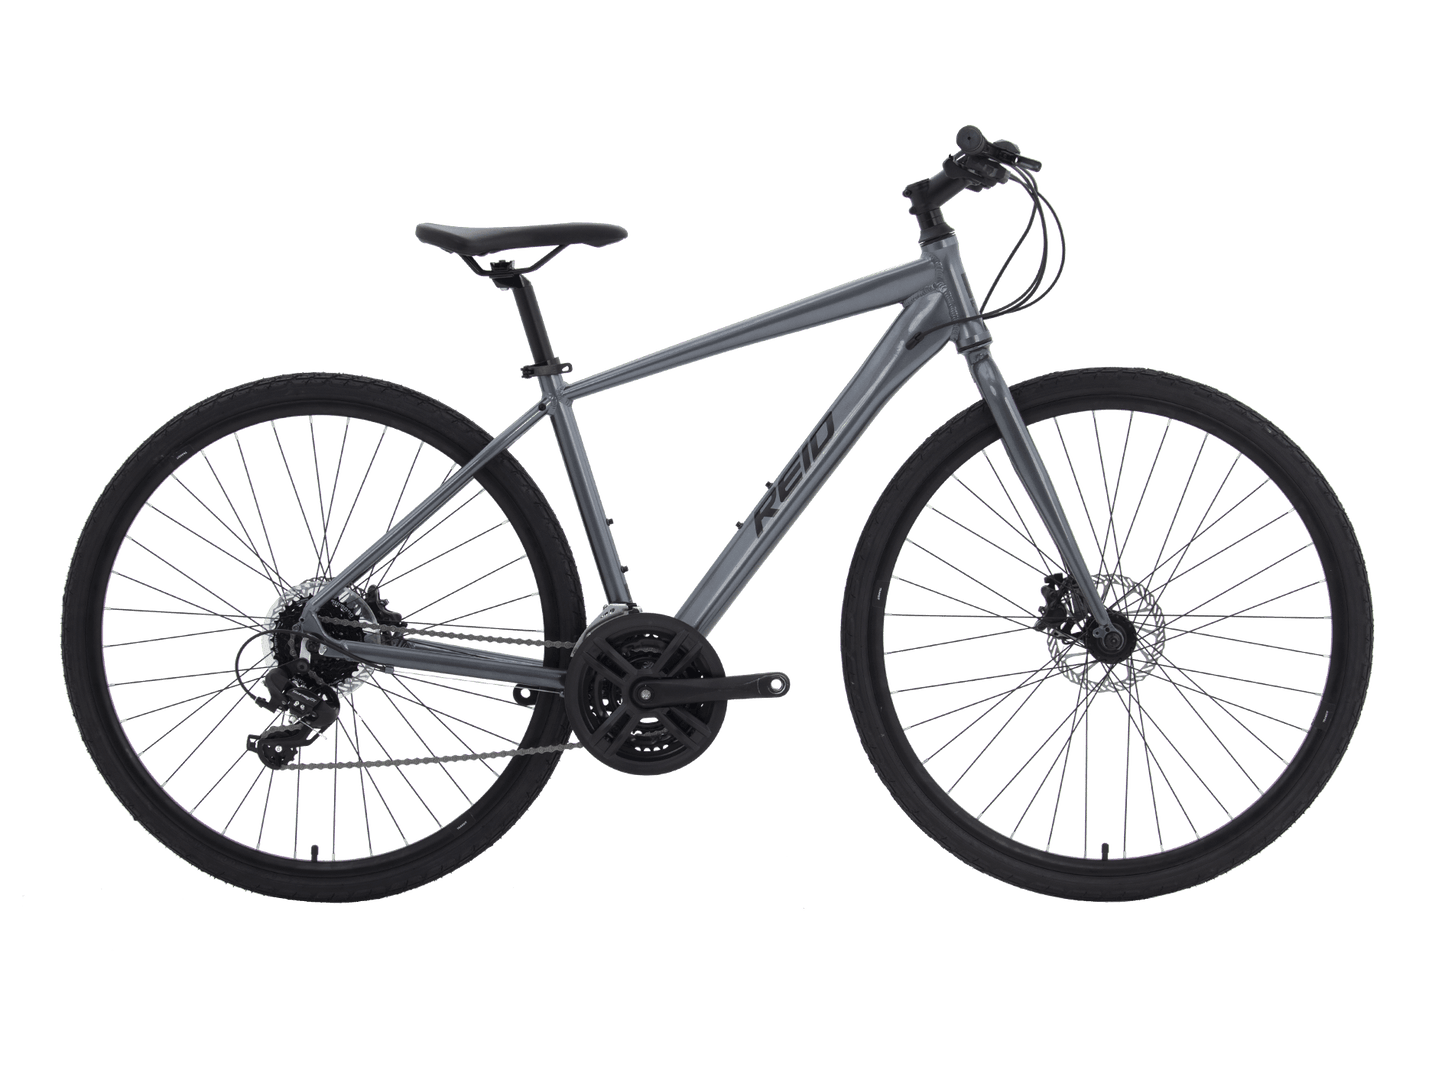 Transit Pro Disc Fitness Hybrid Bike by Reid